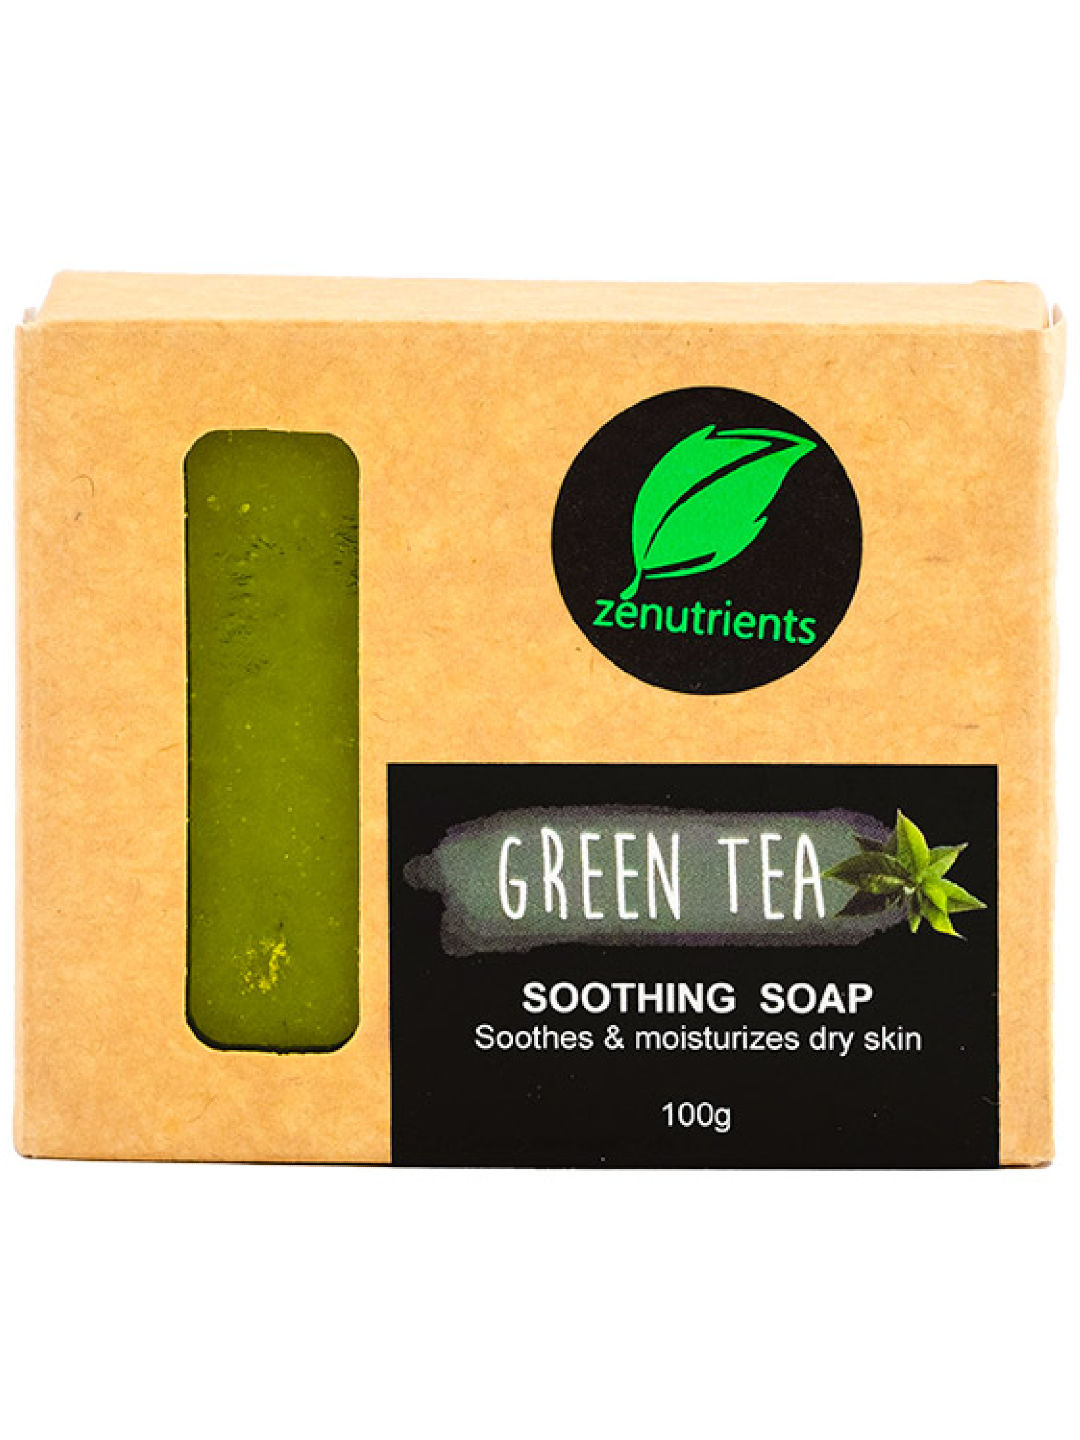 Zenutrients Green Tea Soothing Soap (100g)